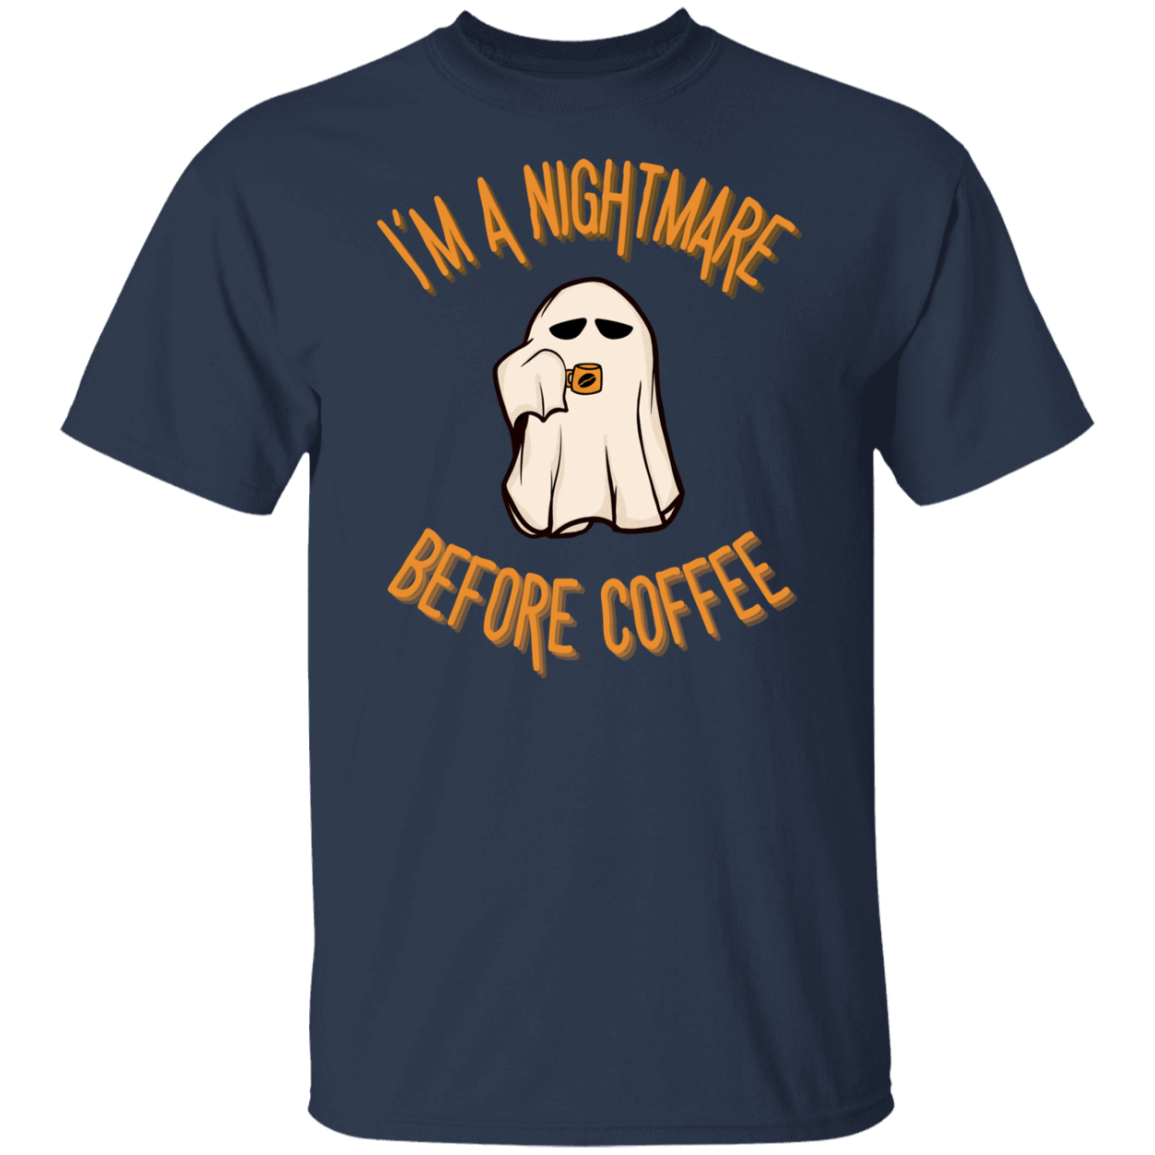 Nightmare Before Coffee Shirt